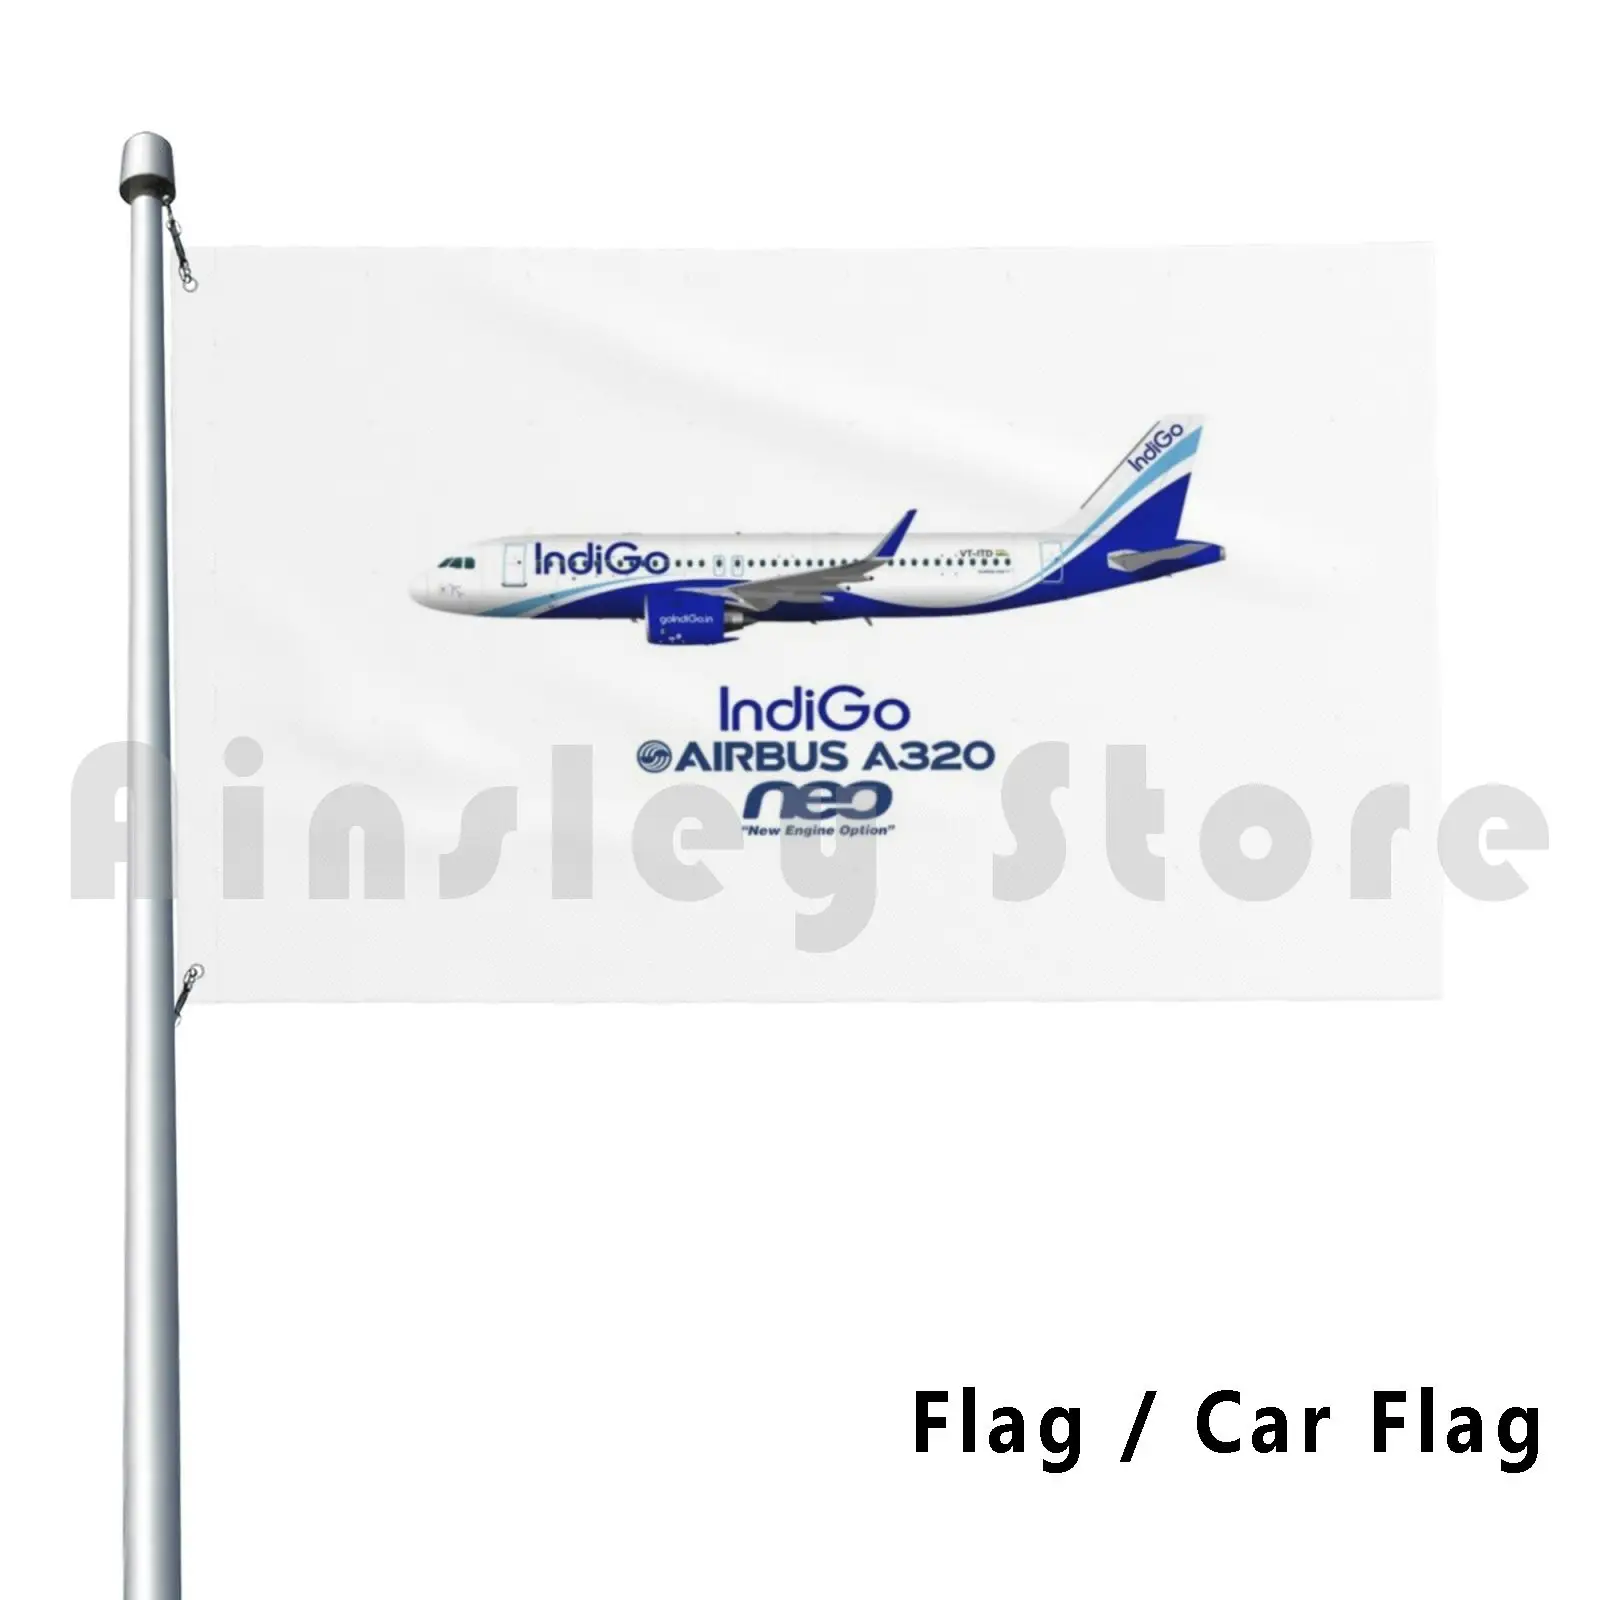 

Illustration Of Indigo Airbus A320 Neo Vt-Itd Outdoor Decor Flag Car Flag Airbus A320 Airbus A320 A320 Airbus Neo New Engine